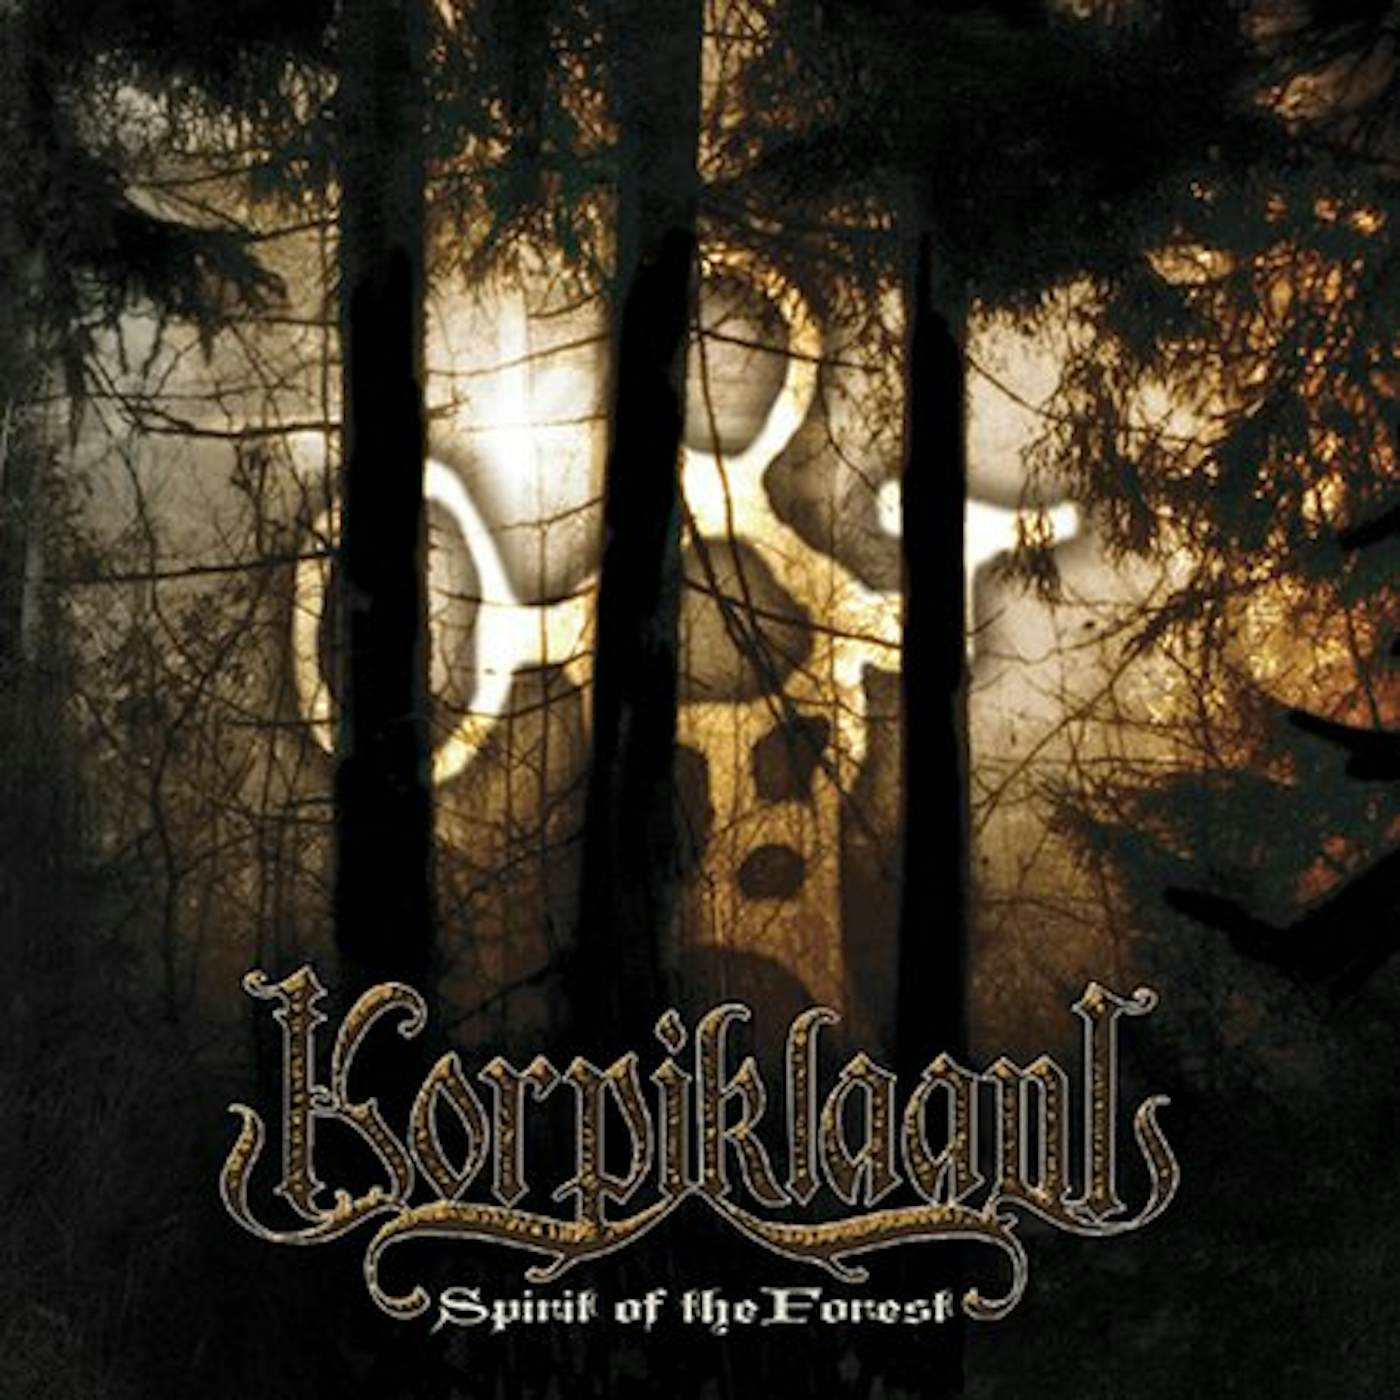 Korpiklaani SPIRIT OF THE FOREST CD